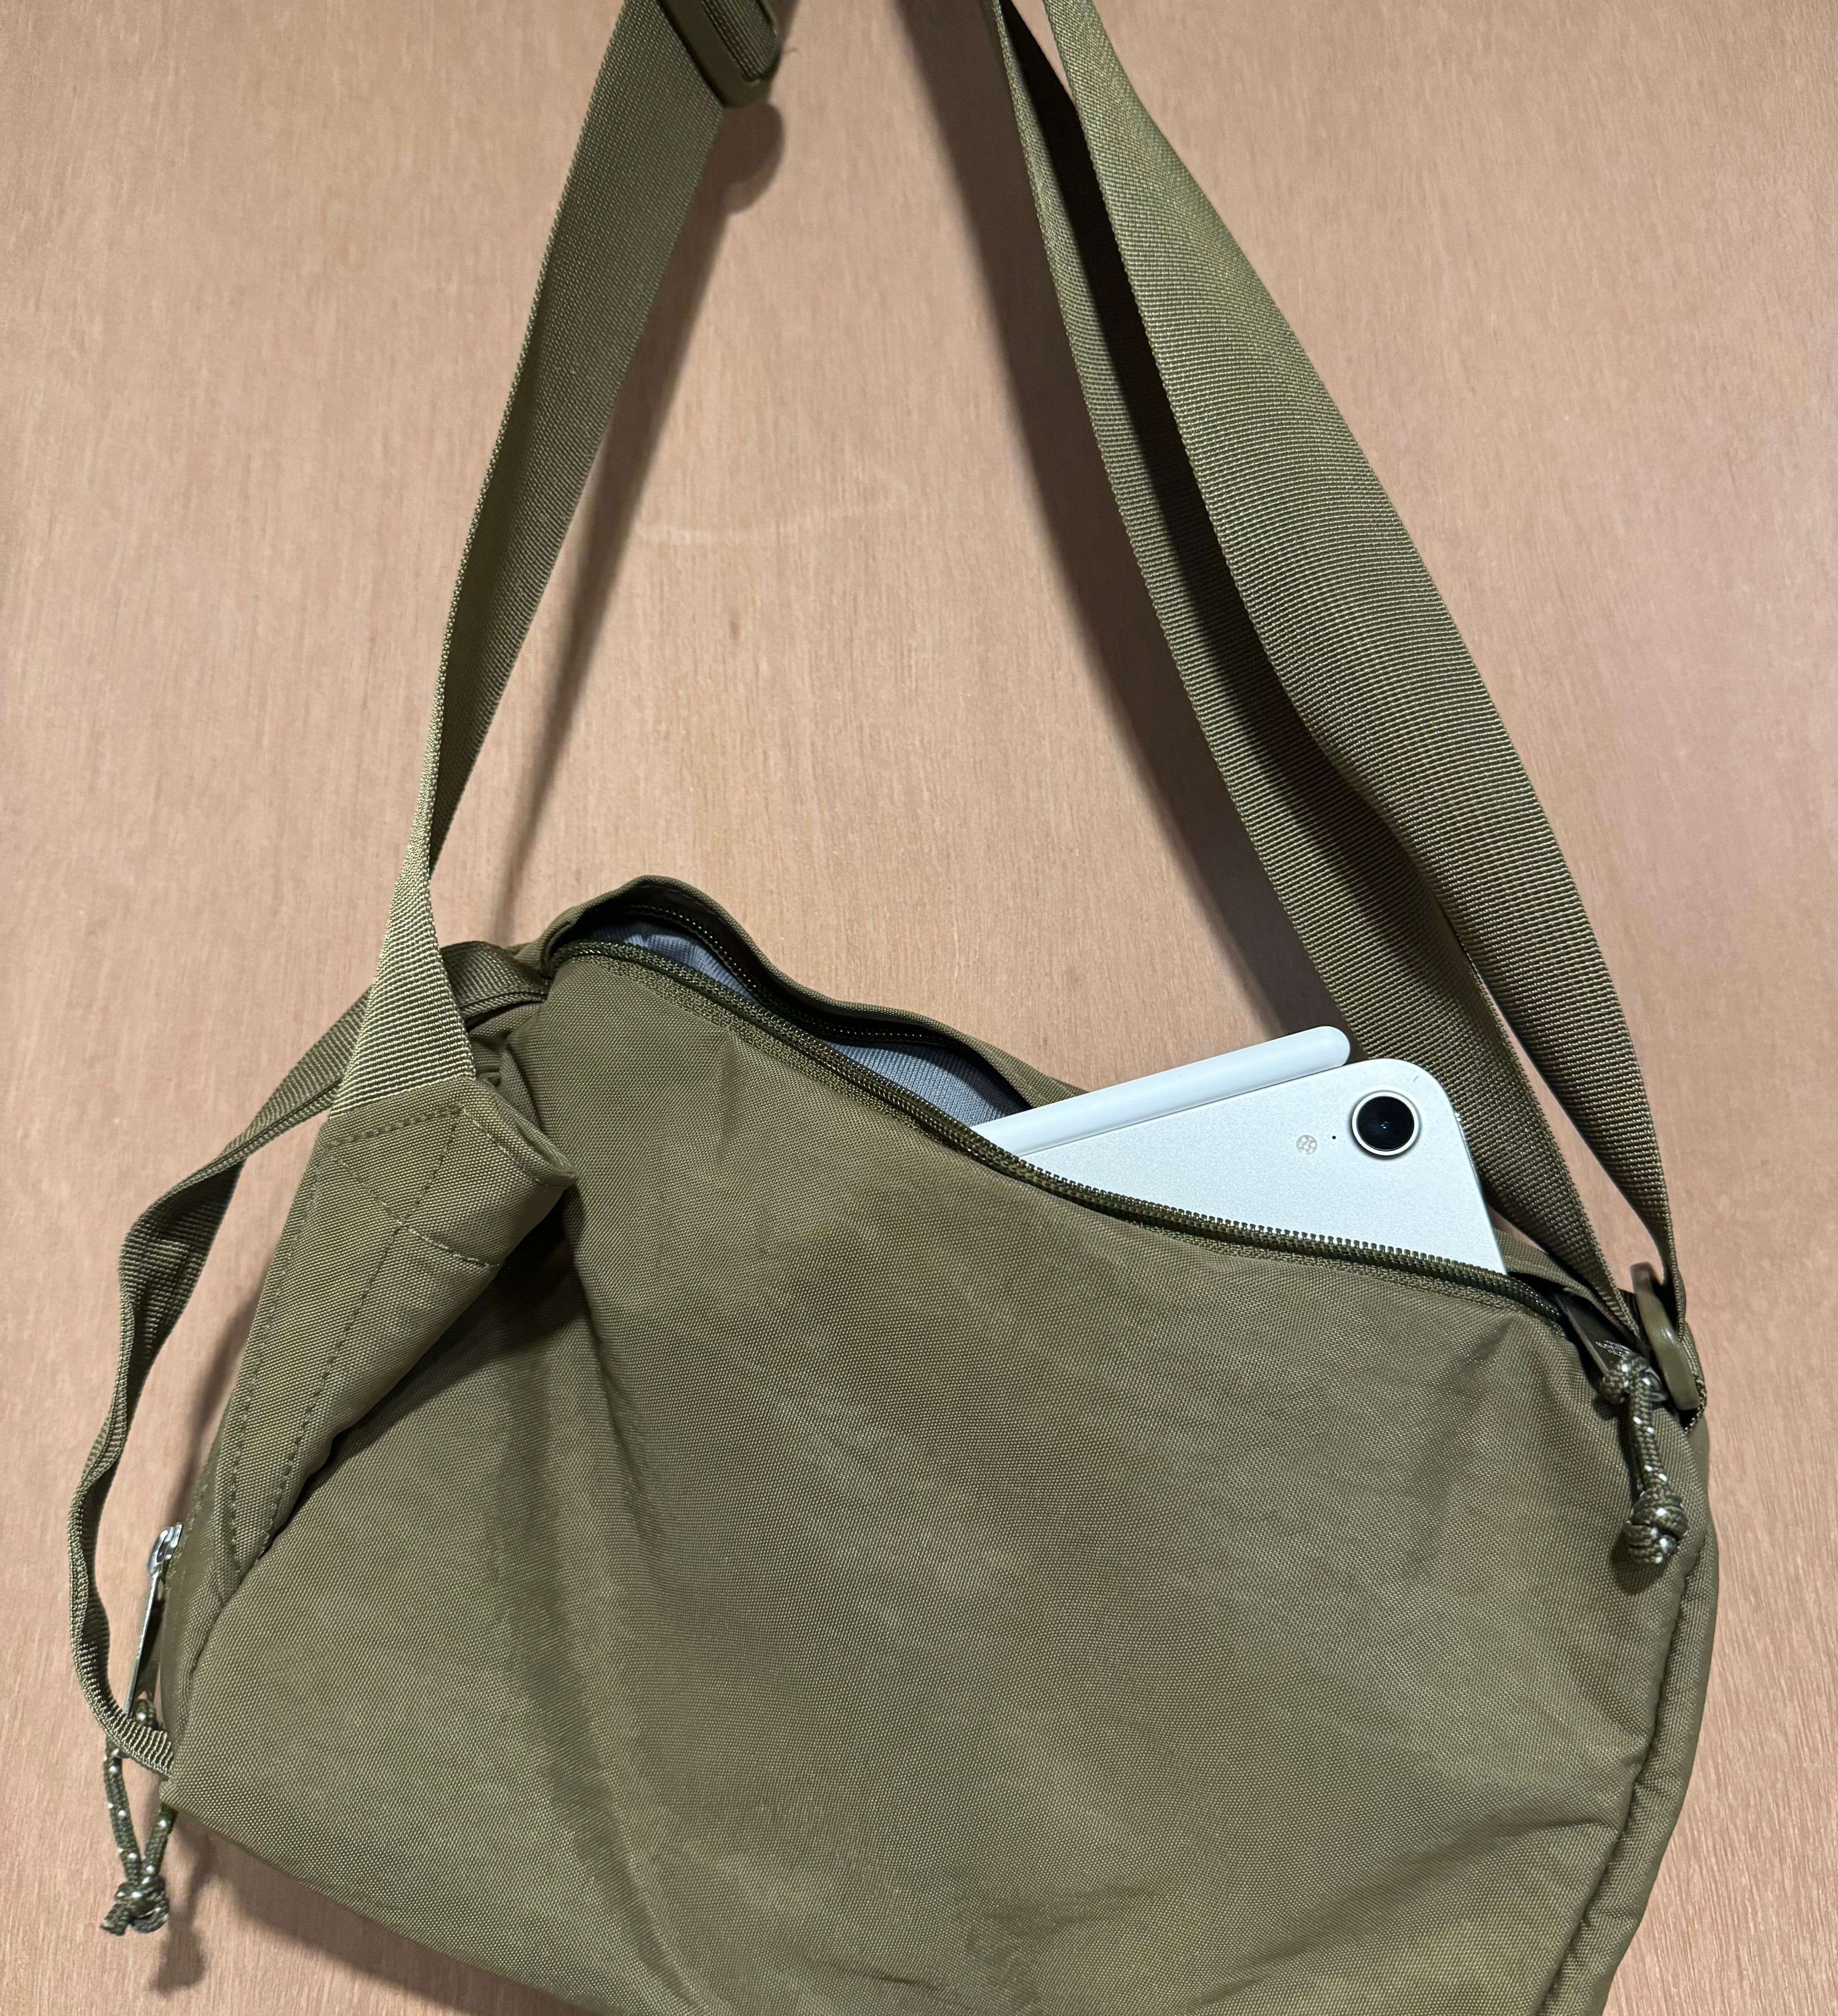 An iPad mini peeking out of a green crossbody bag. 